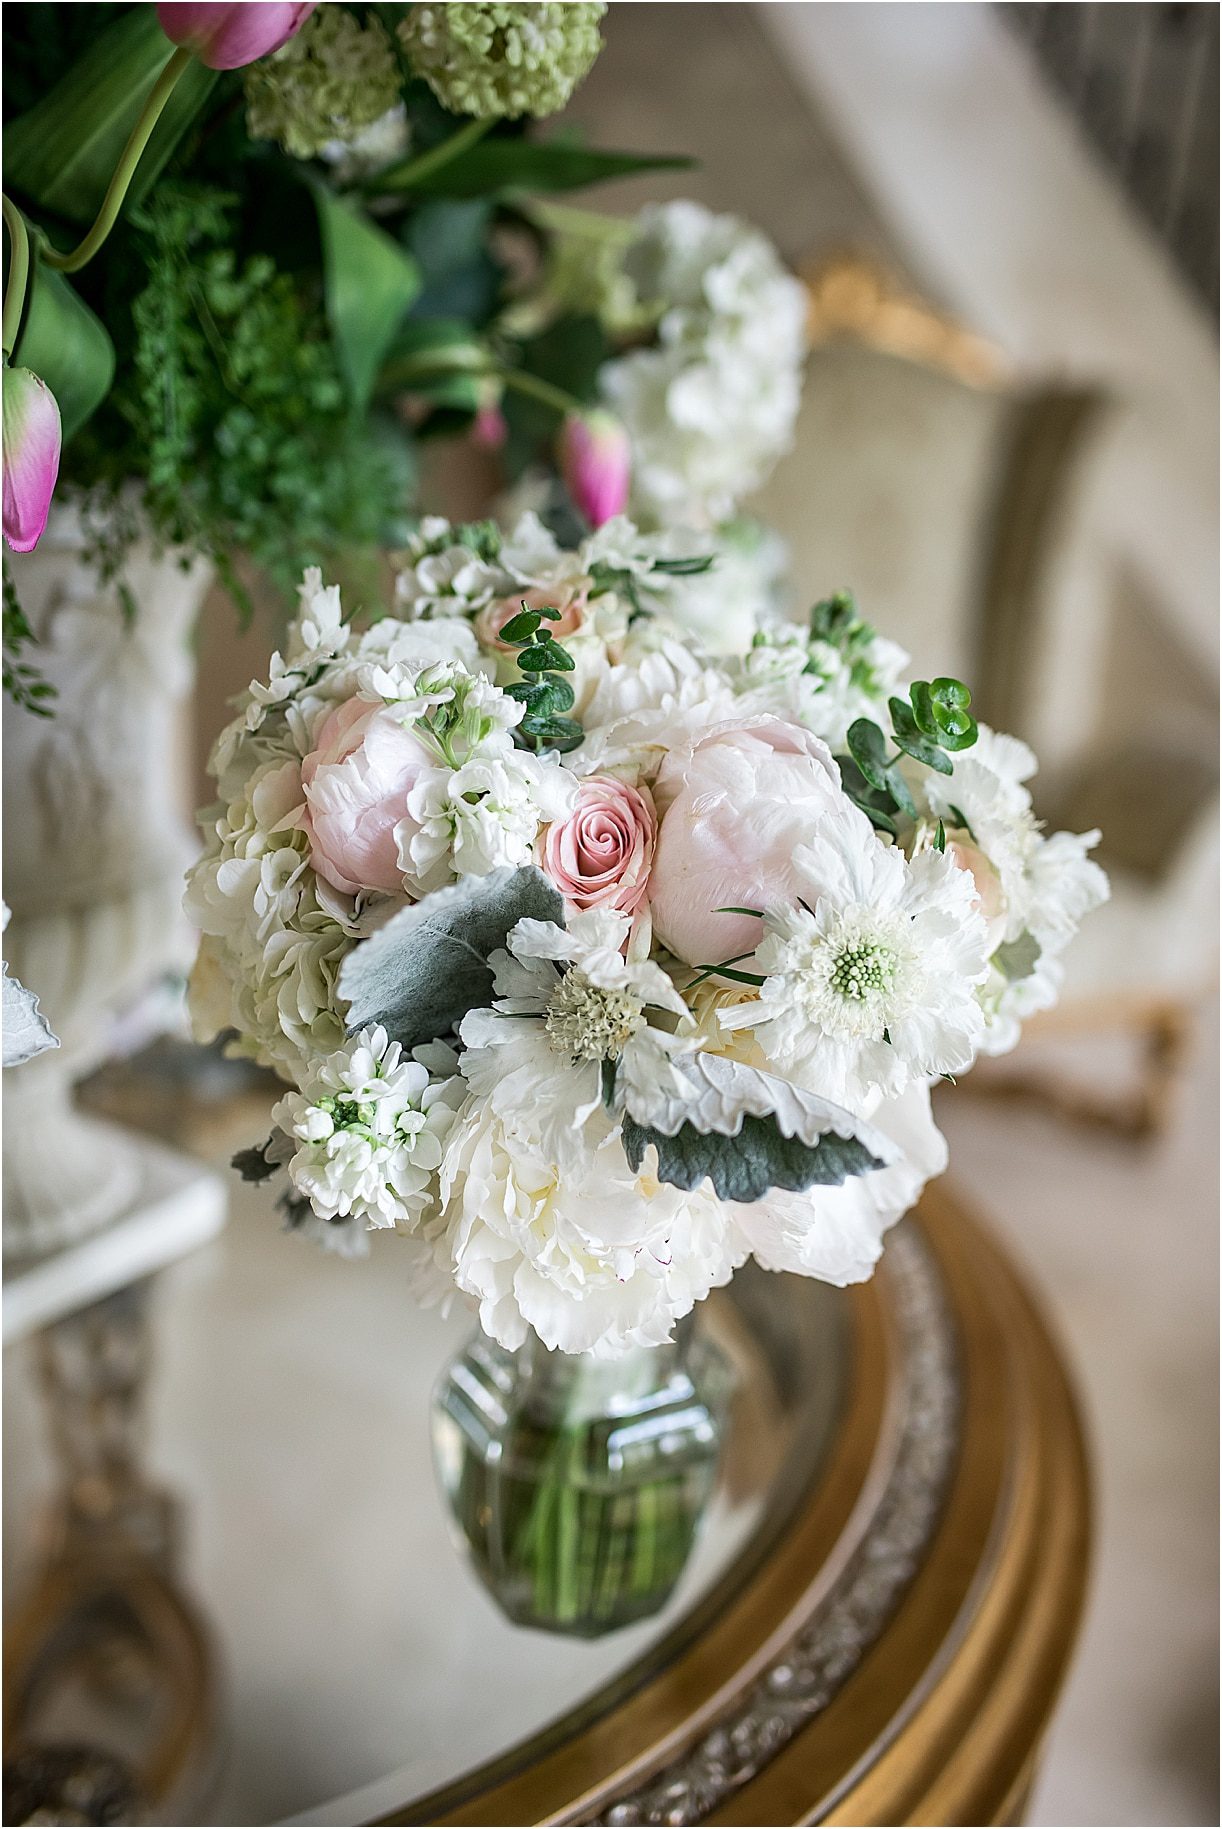 Flowers | Drive In Wedding Ideas | COVID Wedding Ceremony Ideas | Hill City Bride Virginia Weddings